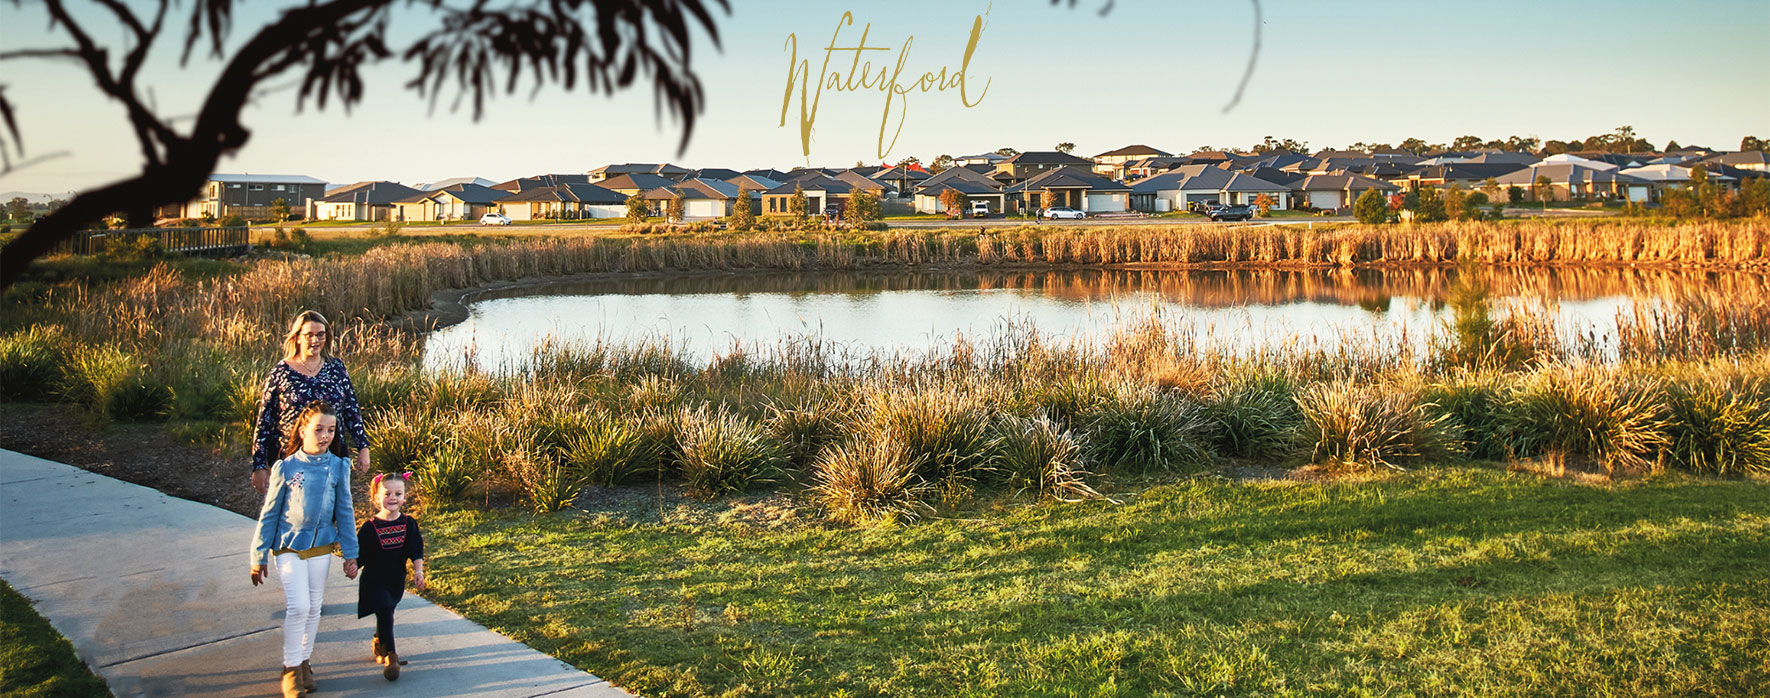 waterford-living-estate-header